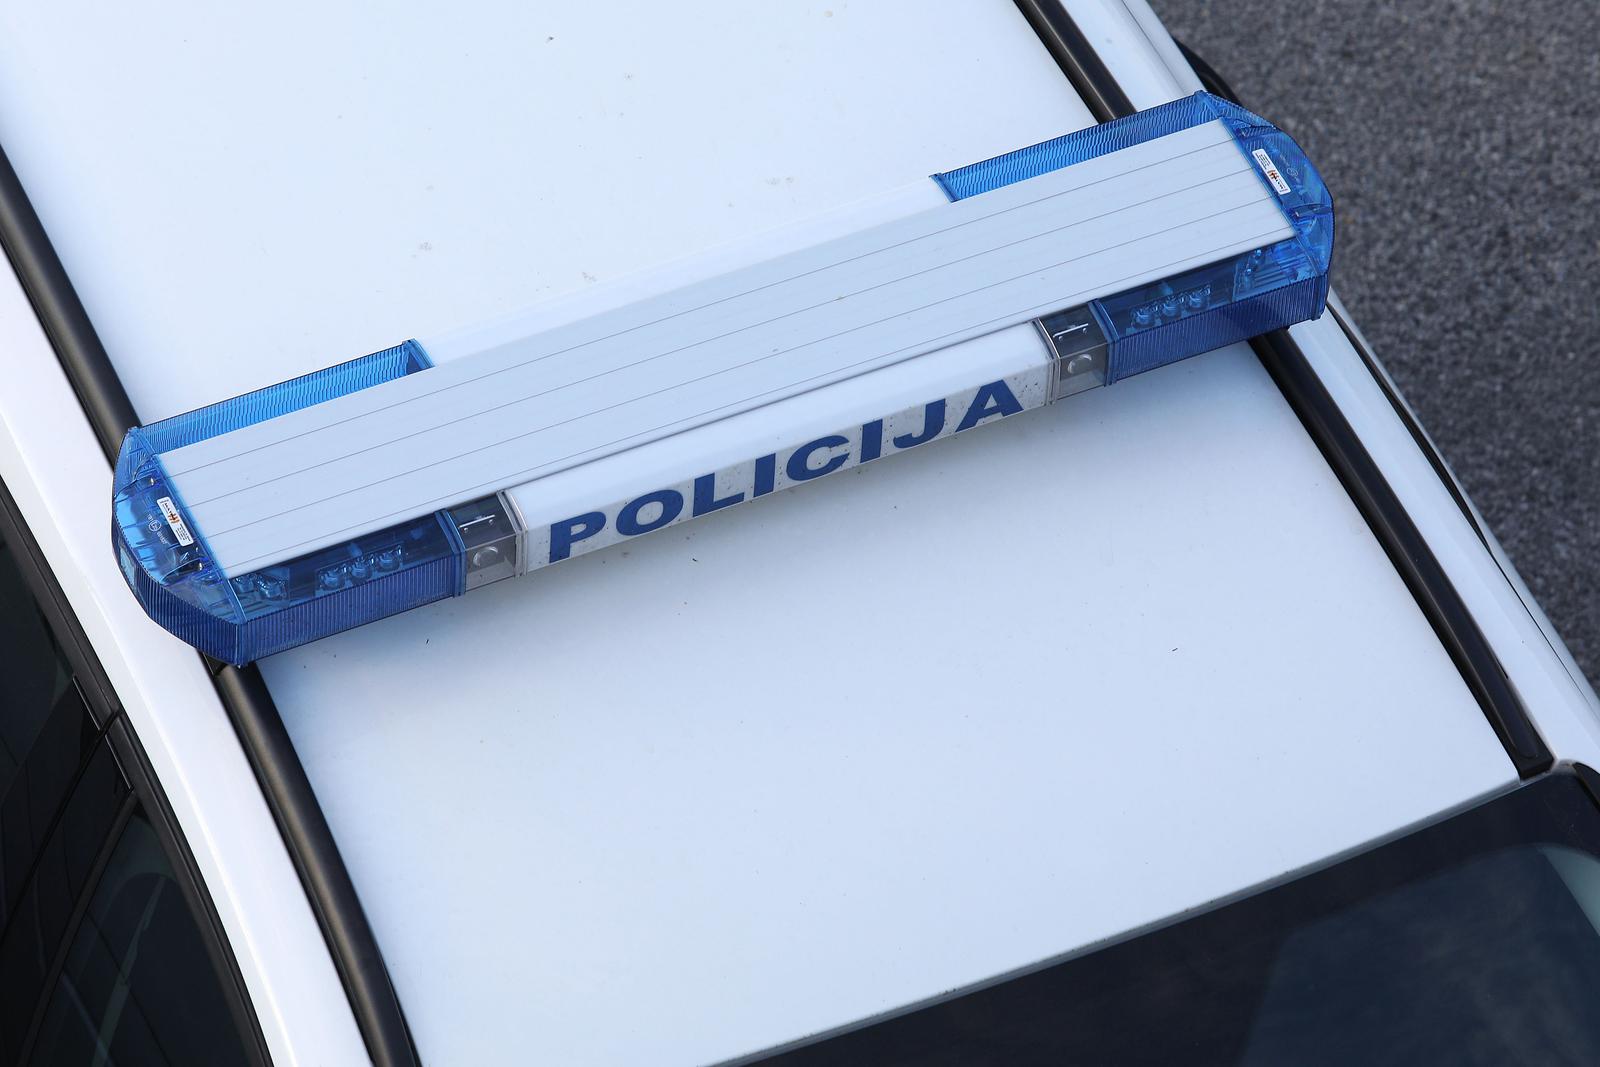 20.06.2018., Zagreb - Policijski automobil.

Photo: Patrik Macek/PIXSELL